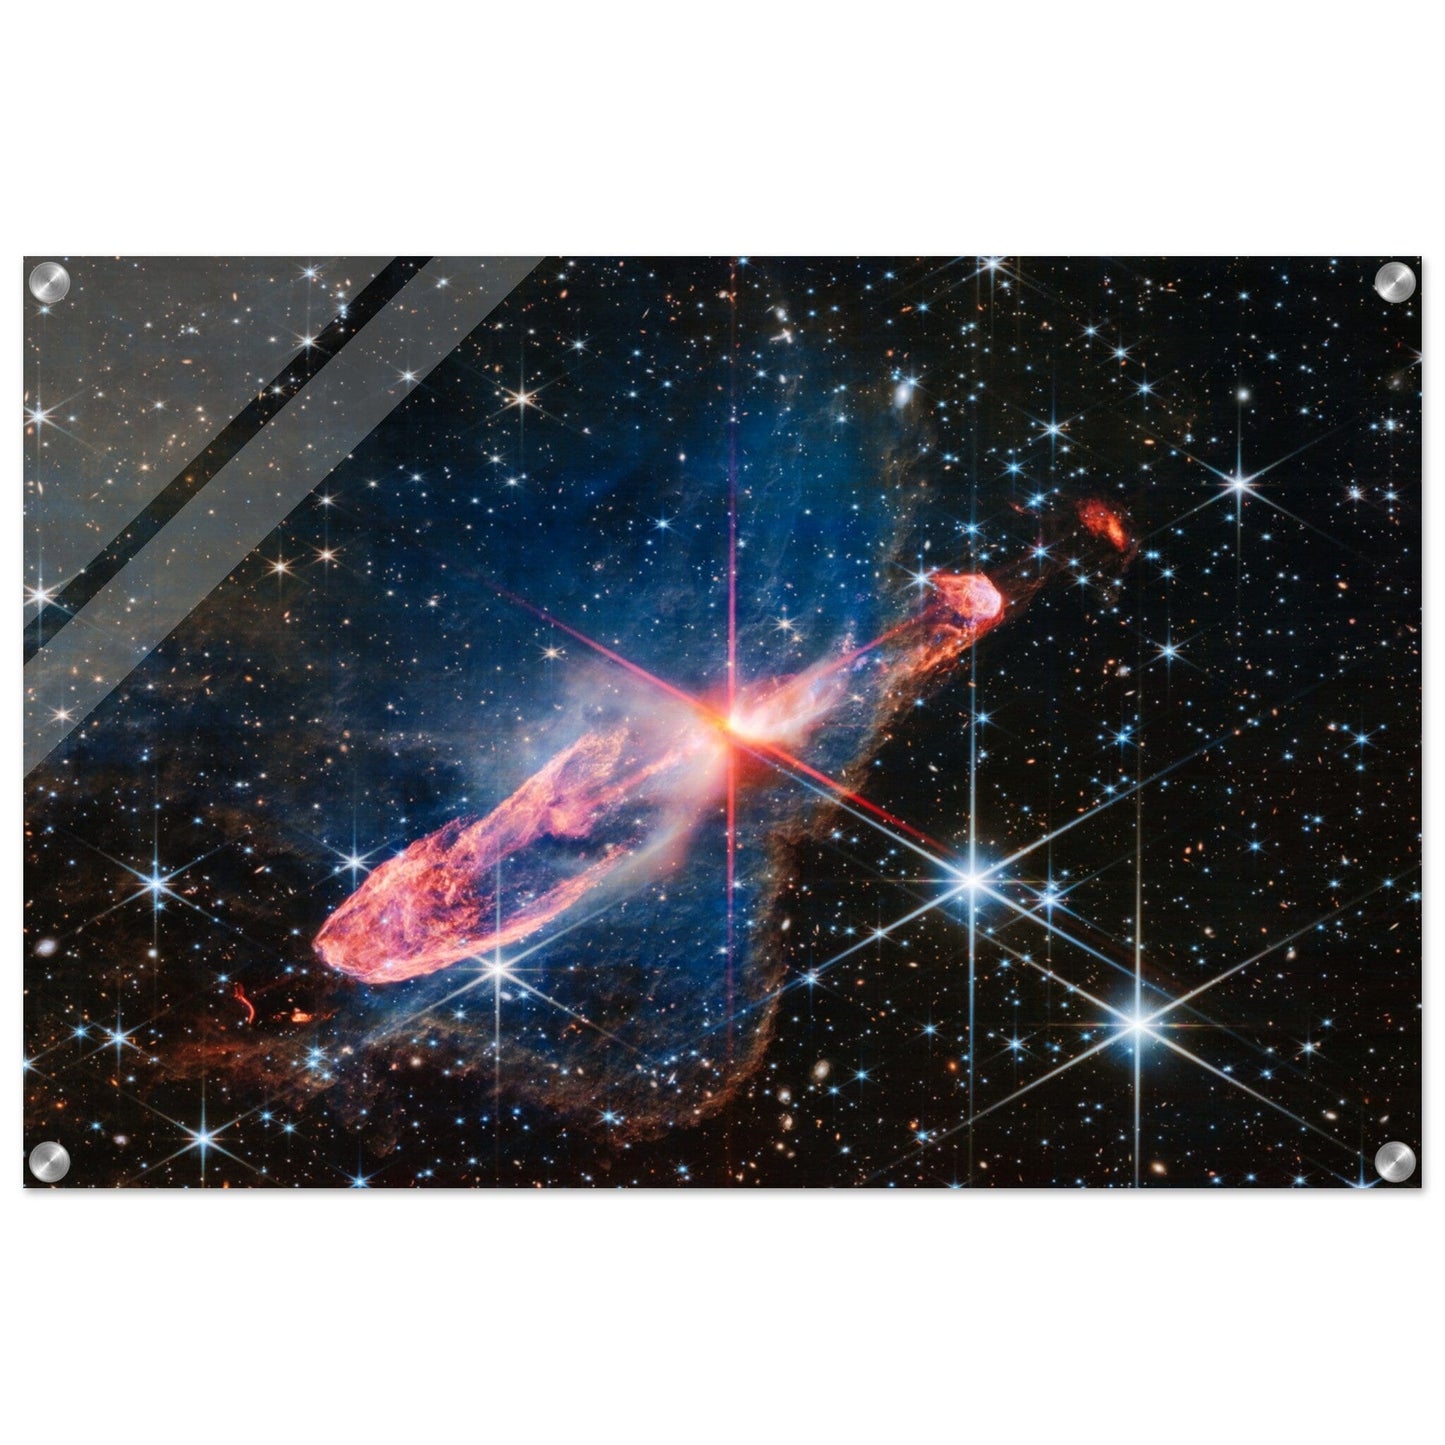 NASA - Poster - Acrylic - 22. Herbig-Haro 46/47 (NIRCam Image) - James Webb Space Telescope Acrylic Print TP Aviation Art 